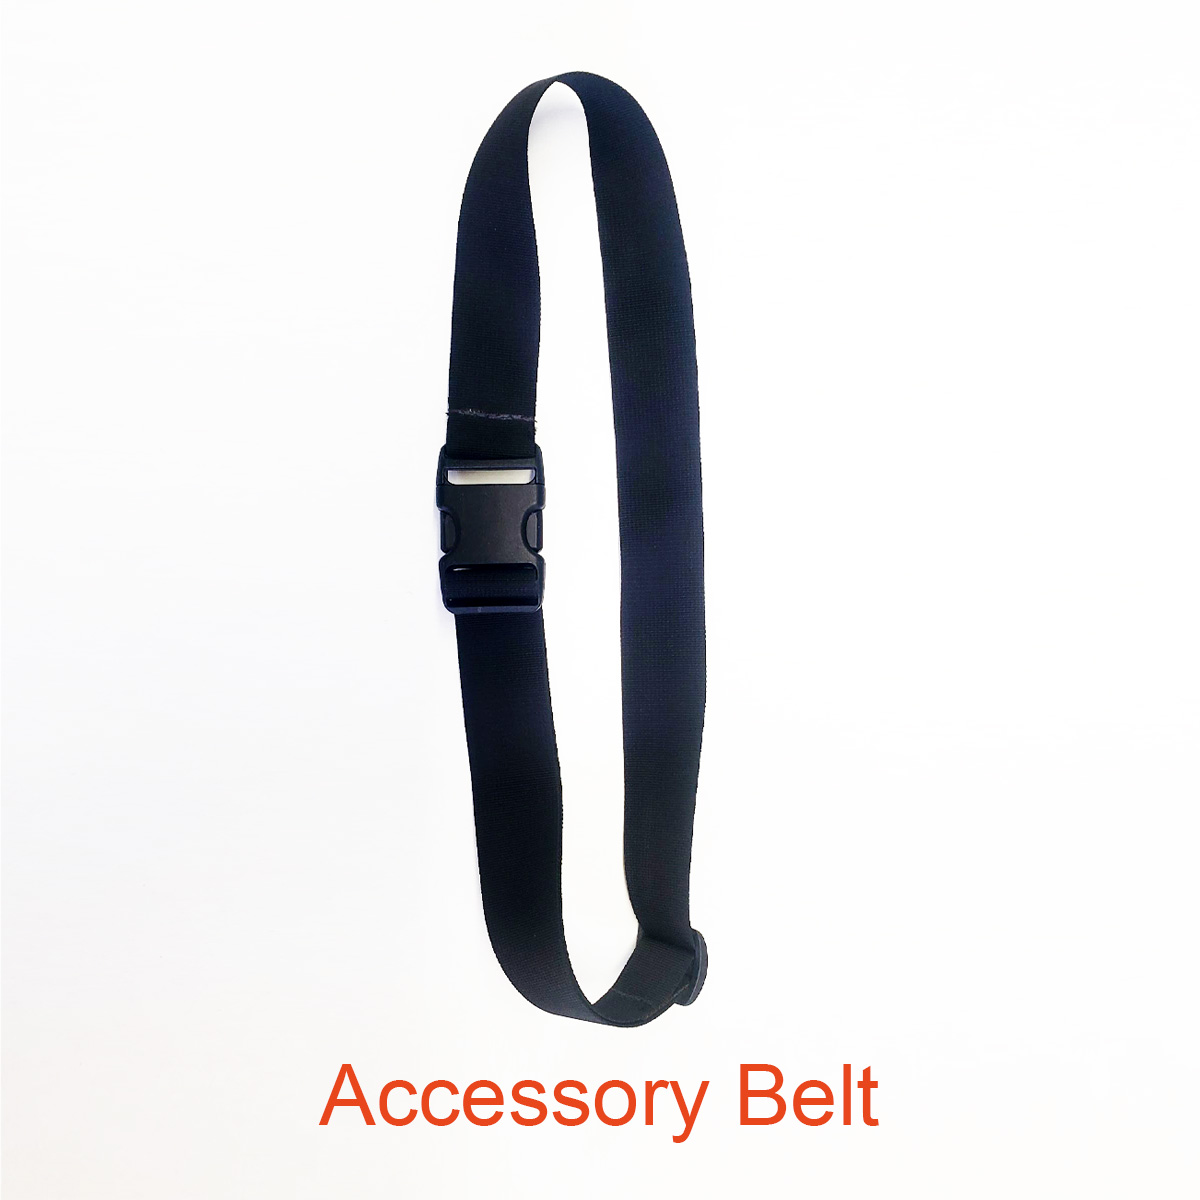 Accessory Belt